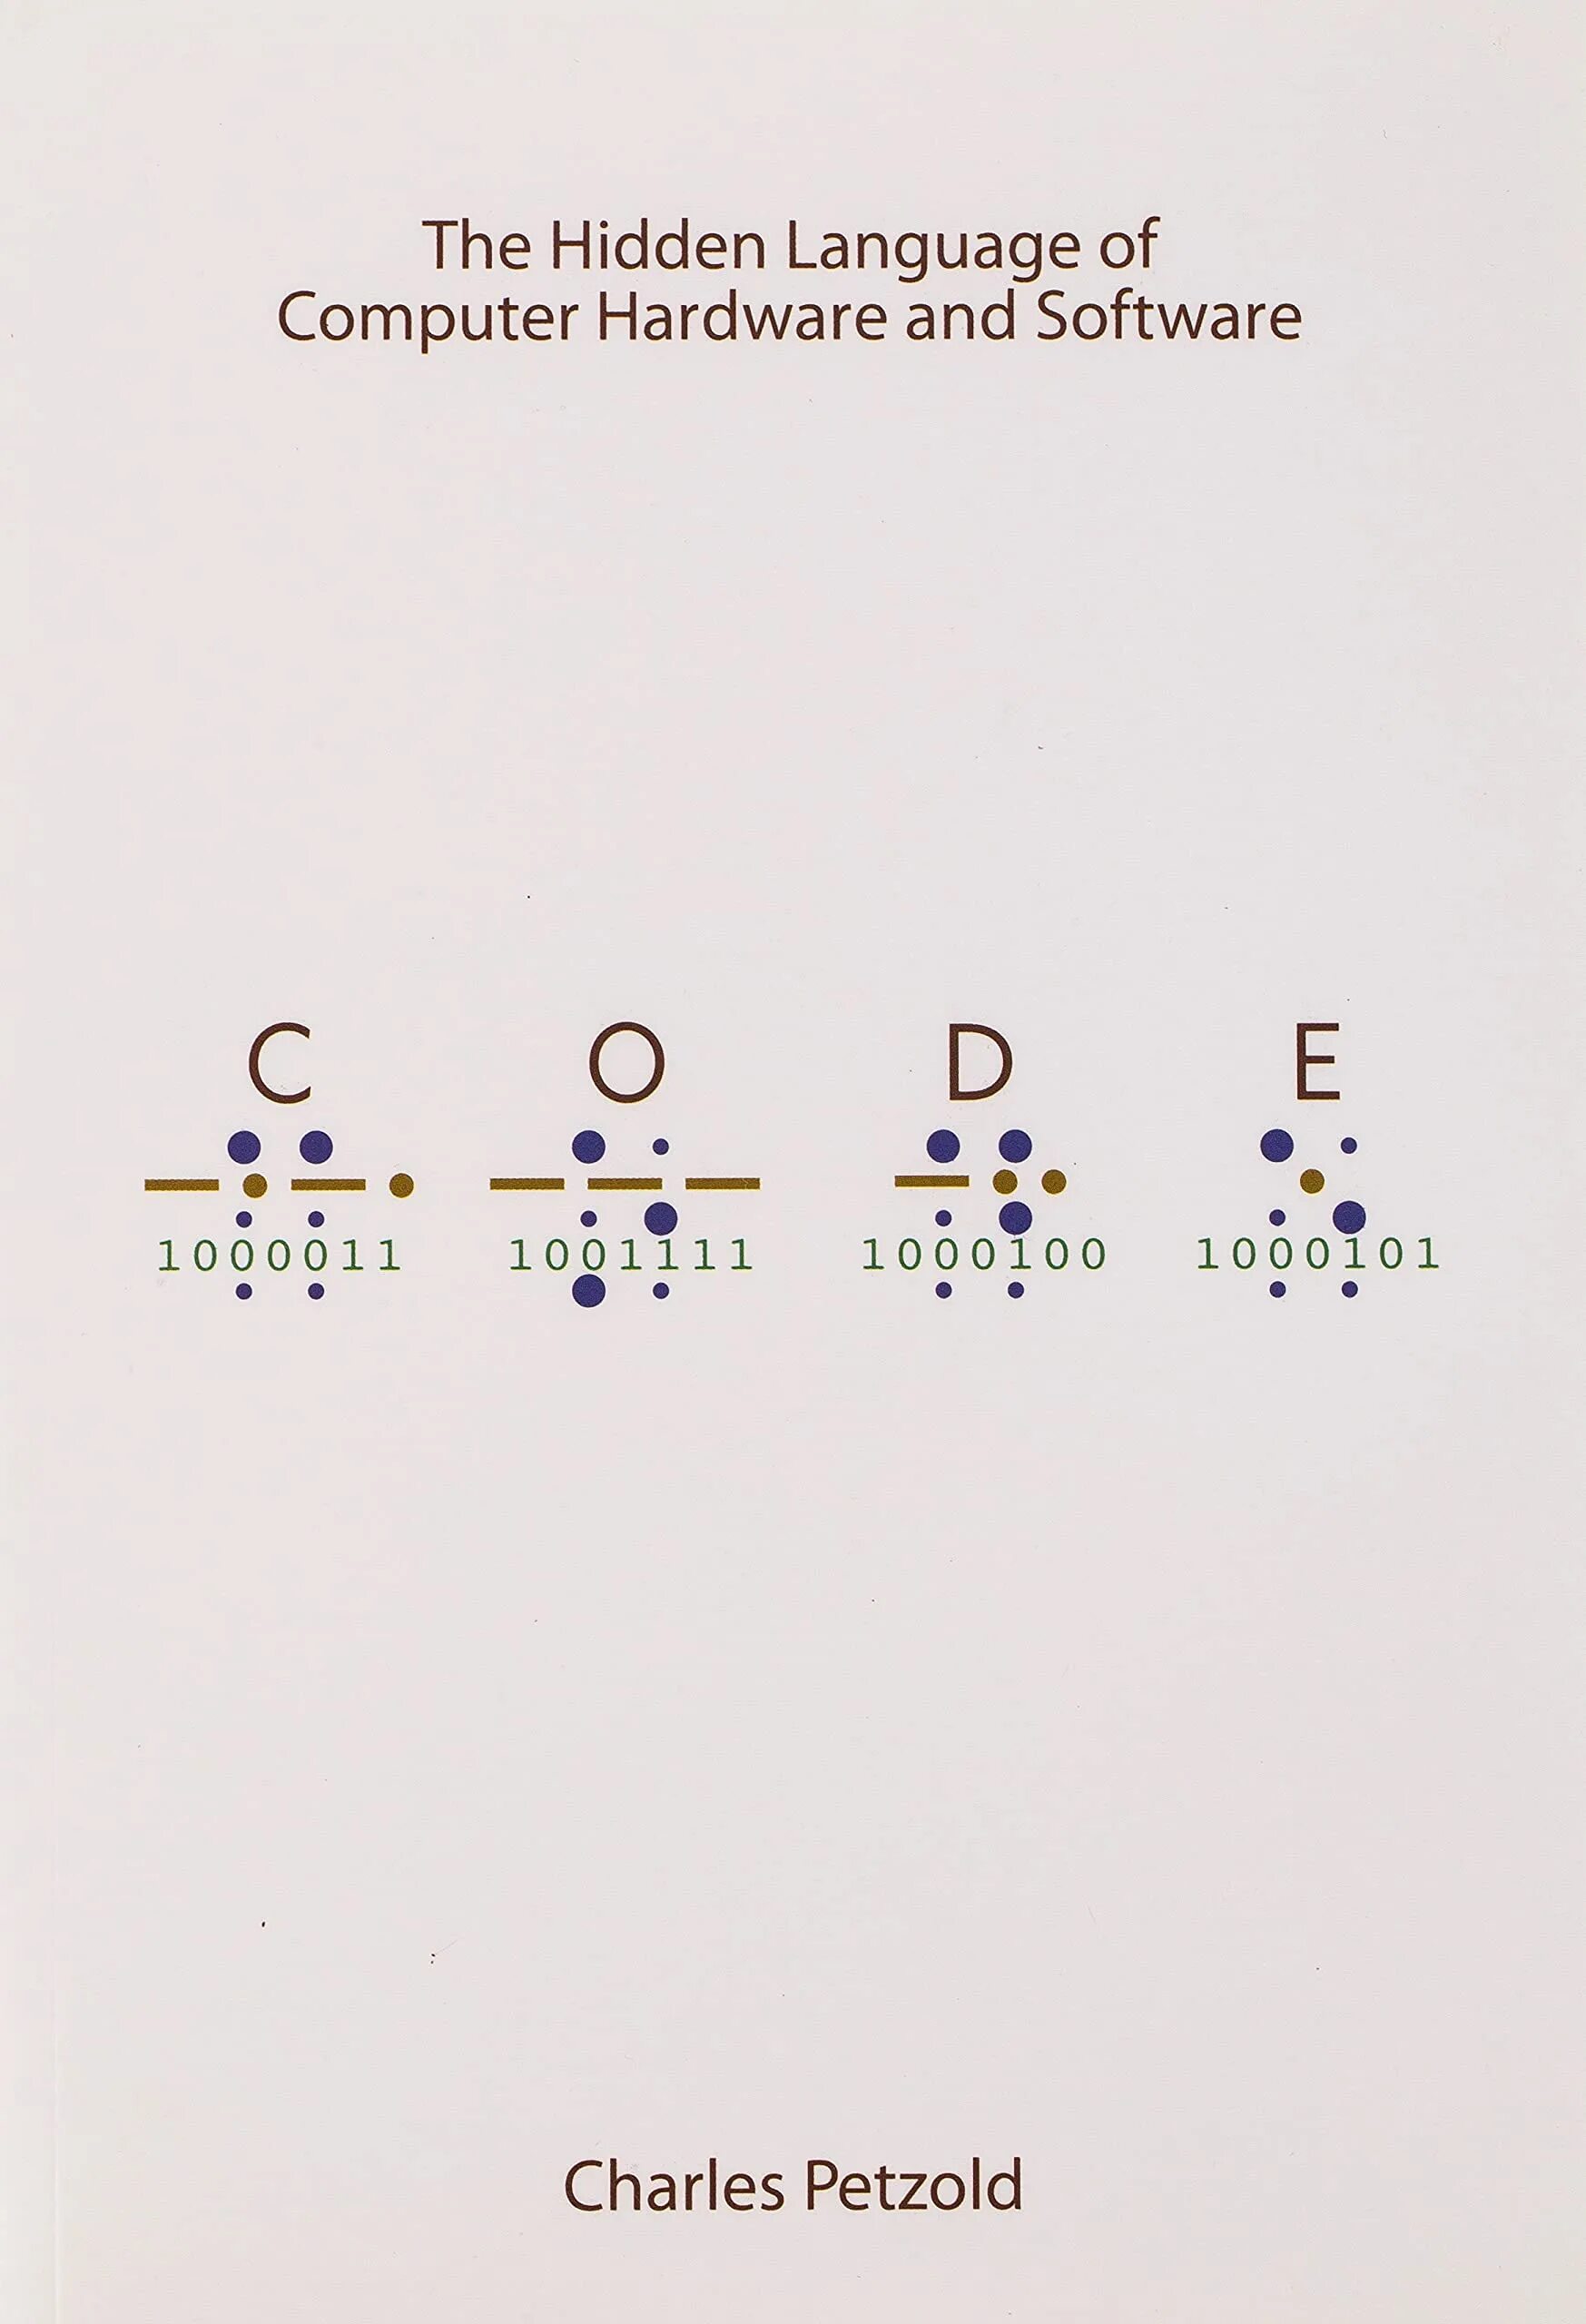 Петцольд код тайный язык информатики. Code: the hidden language of Computer Hardware and software. Charles Petzold "c.o.d.e.".